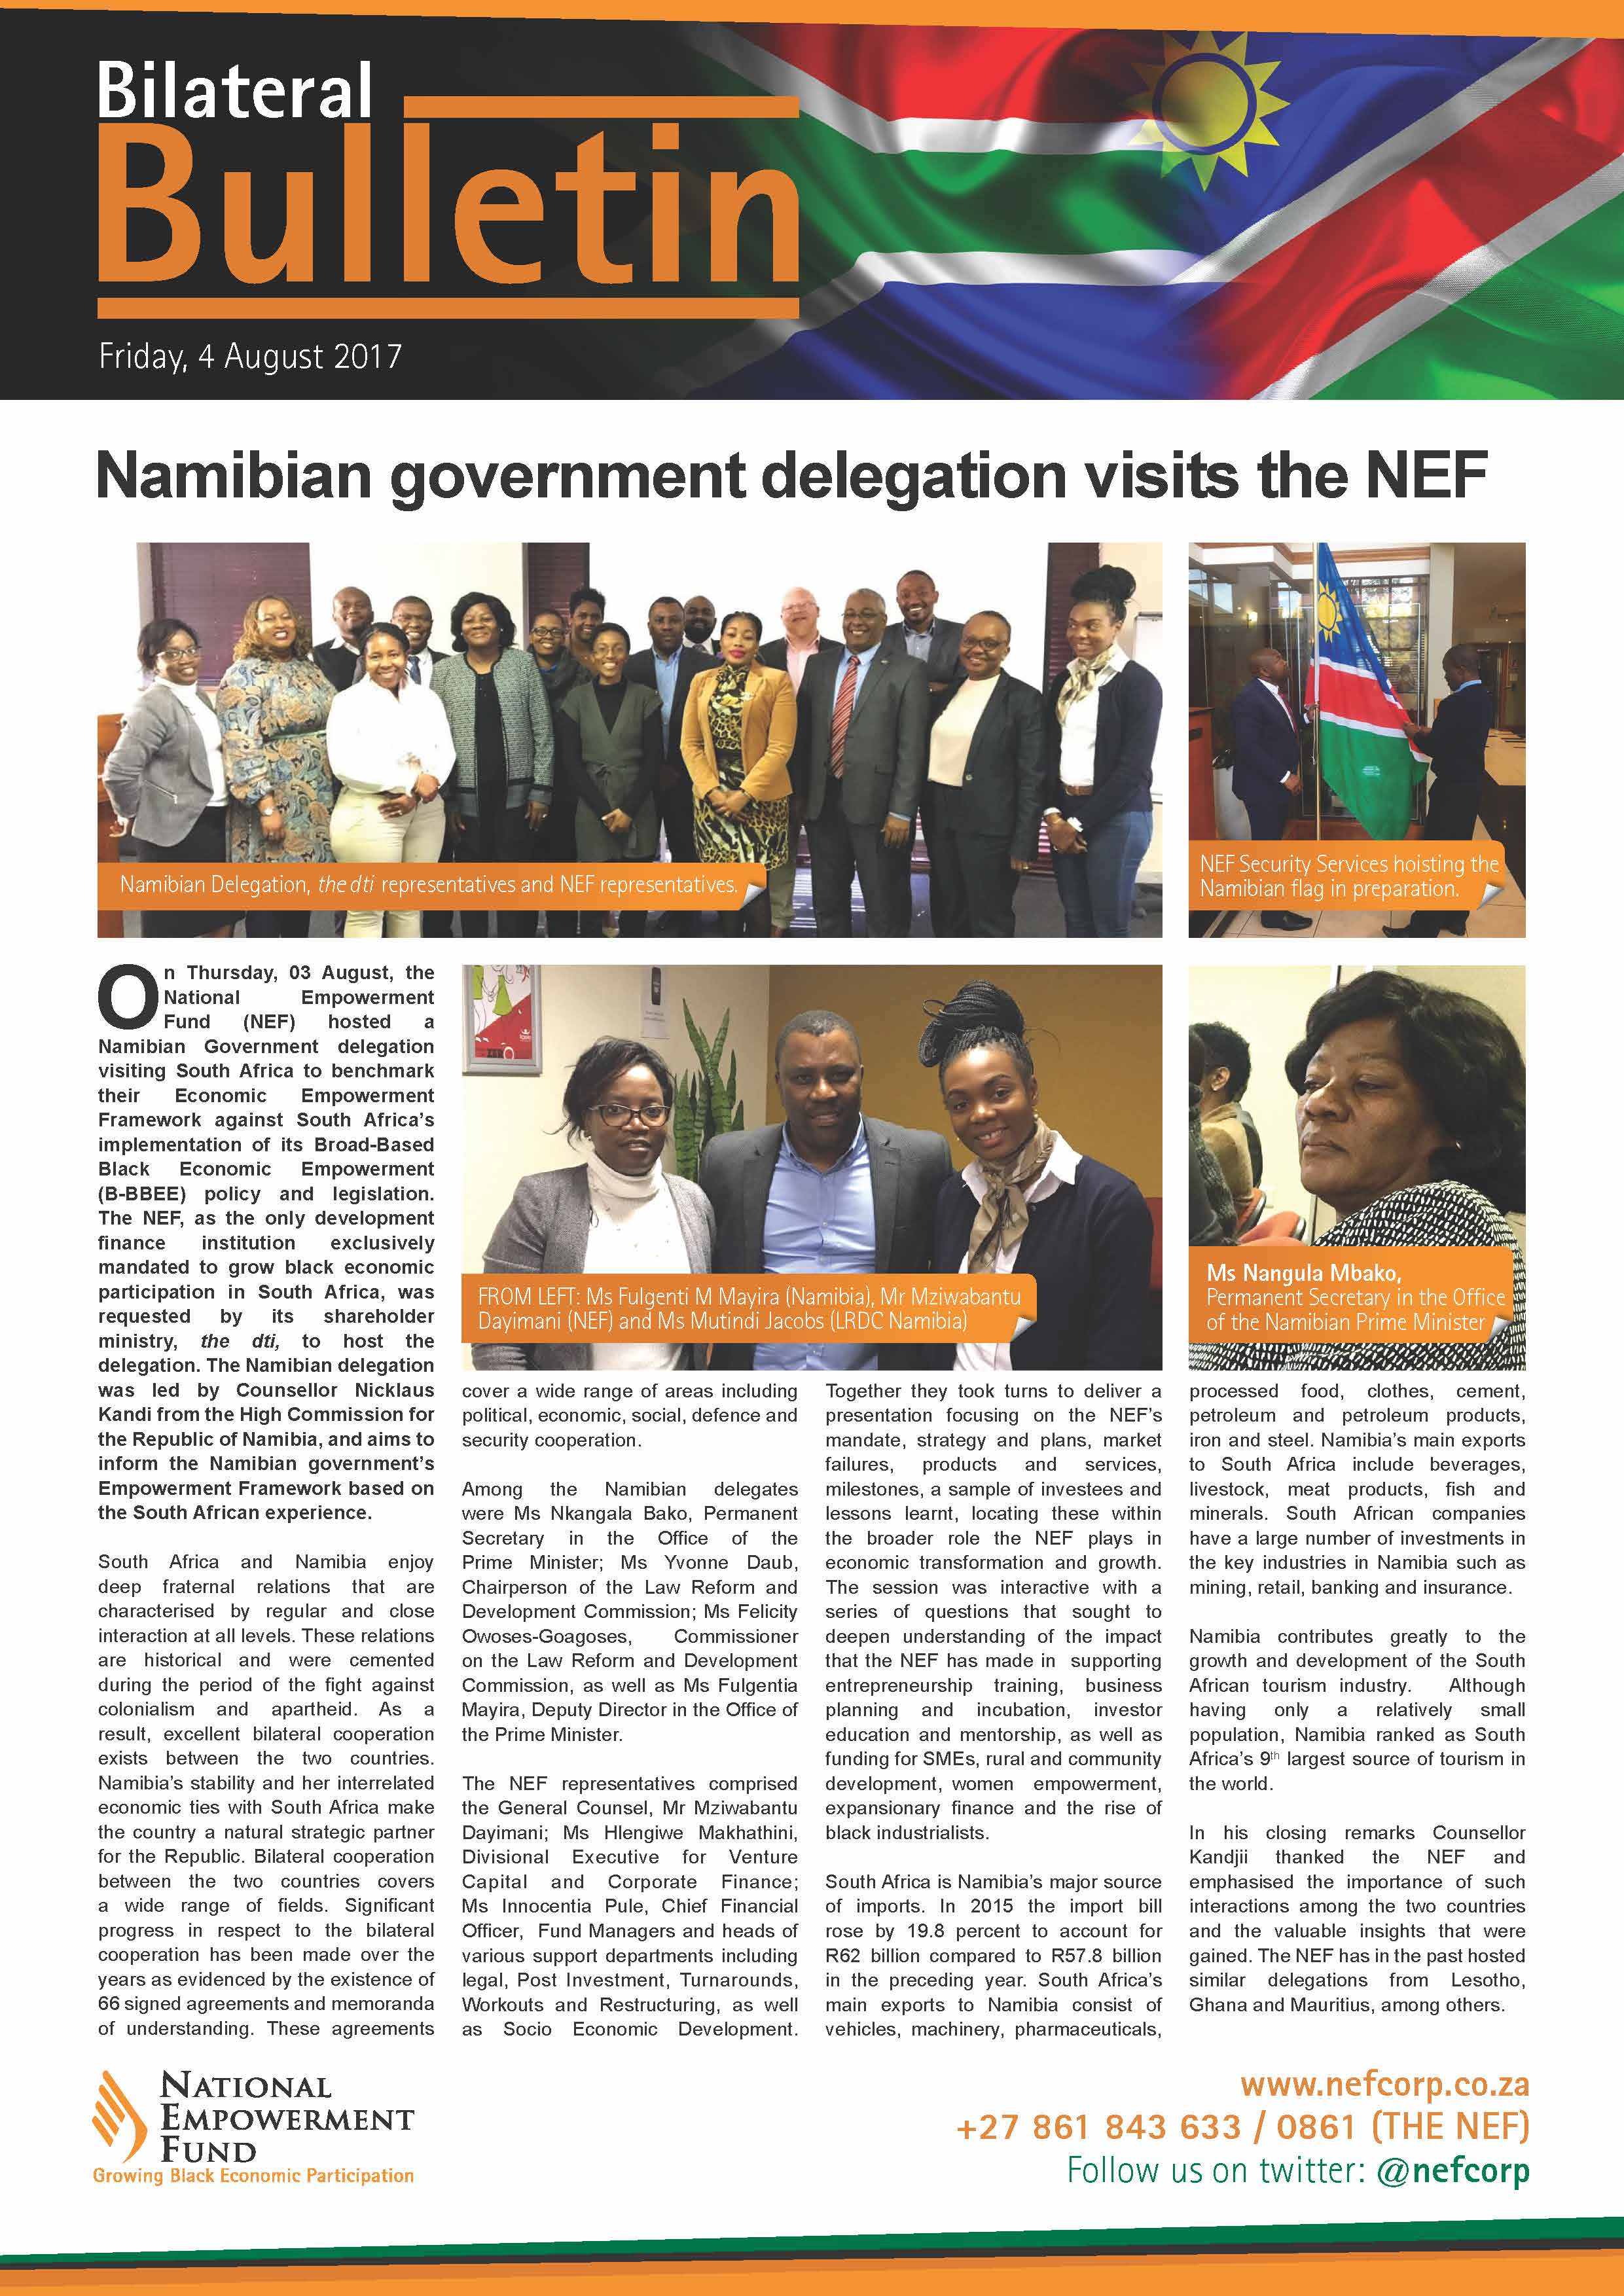 Namibian Government Delegation Visits The NEF